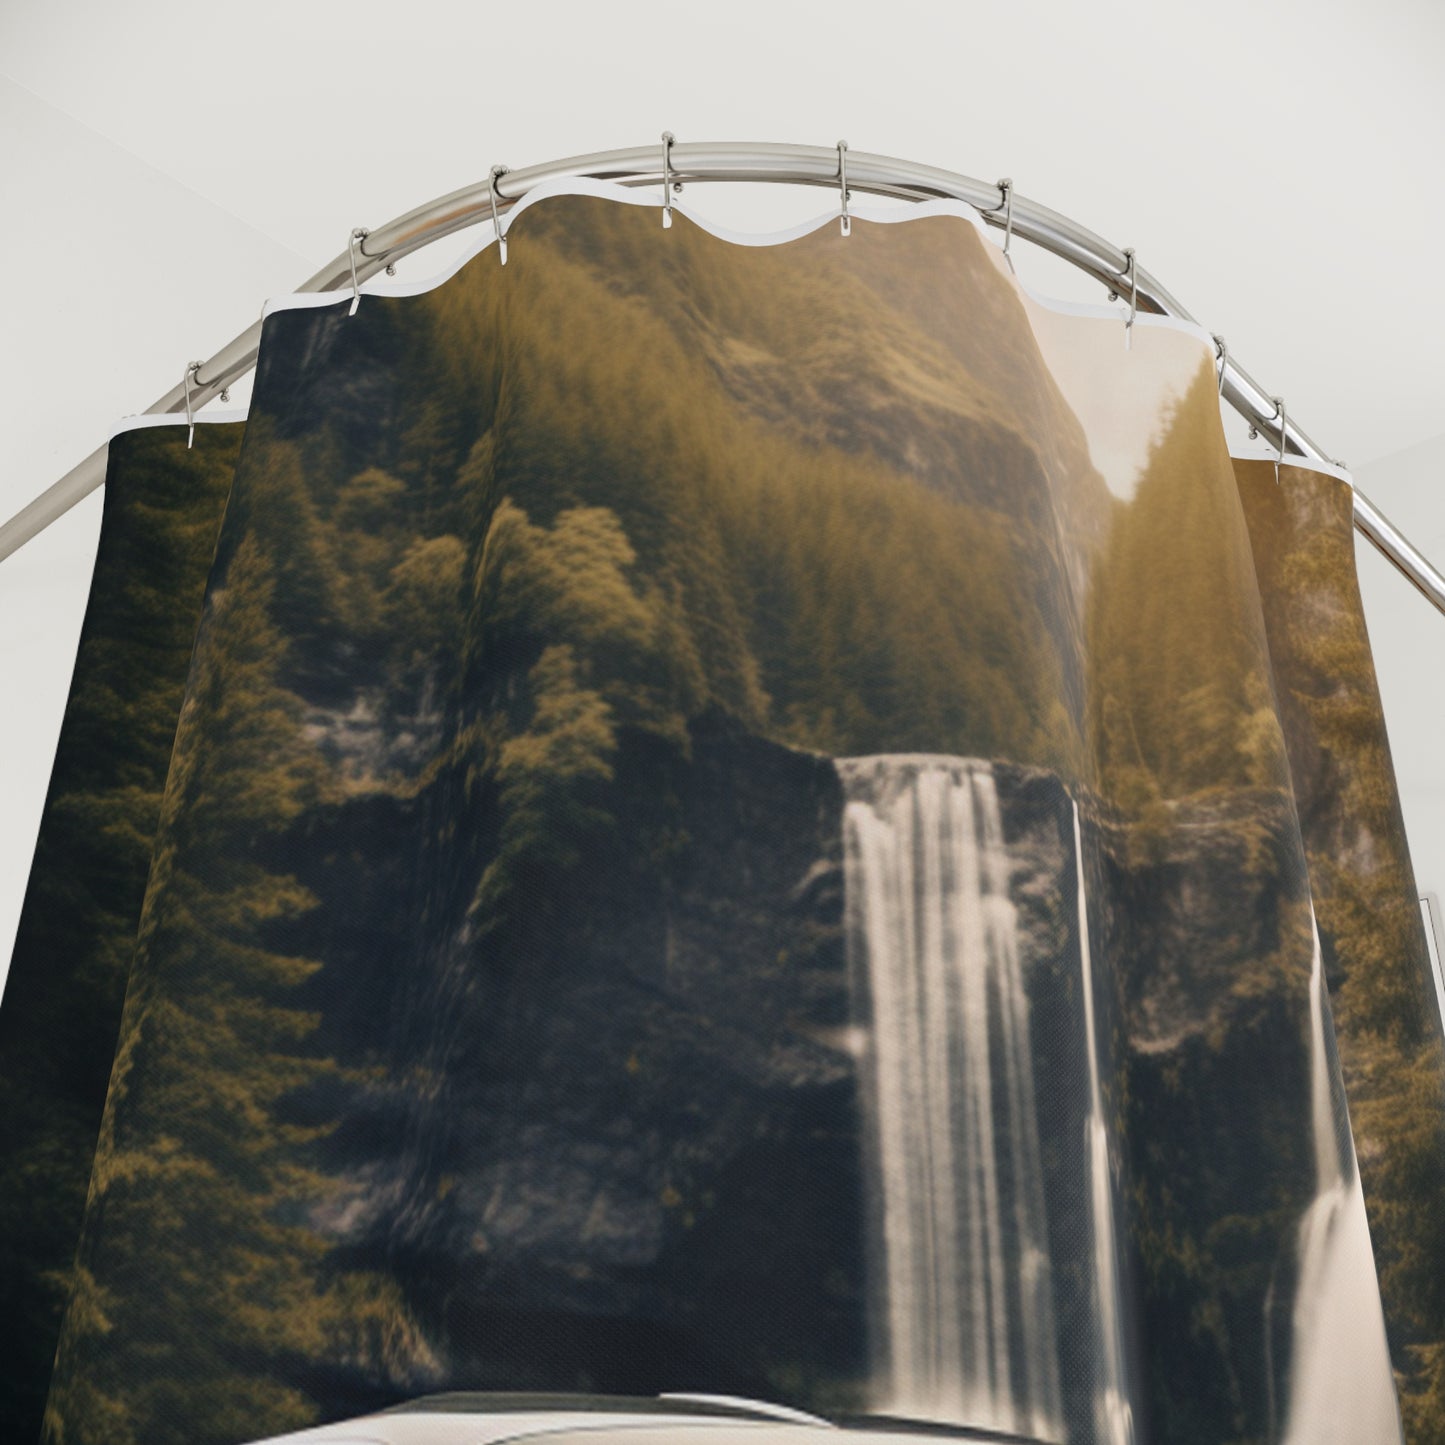 Polyester Shower Curtain Bugatti Waterfall 3